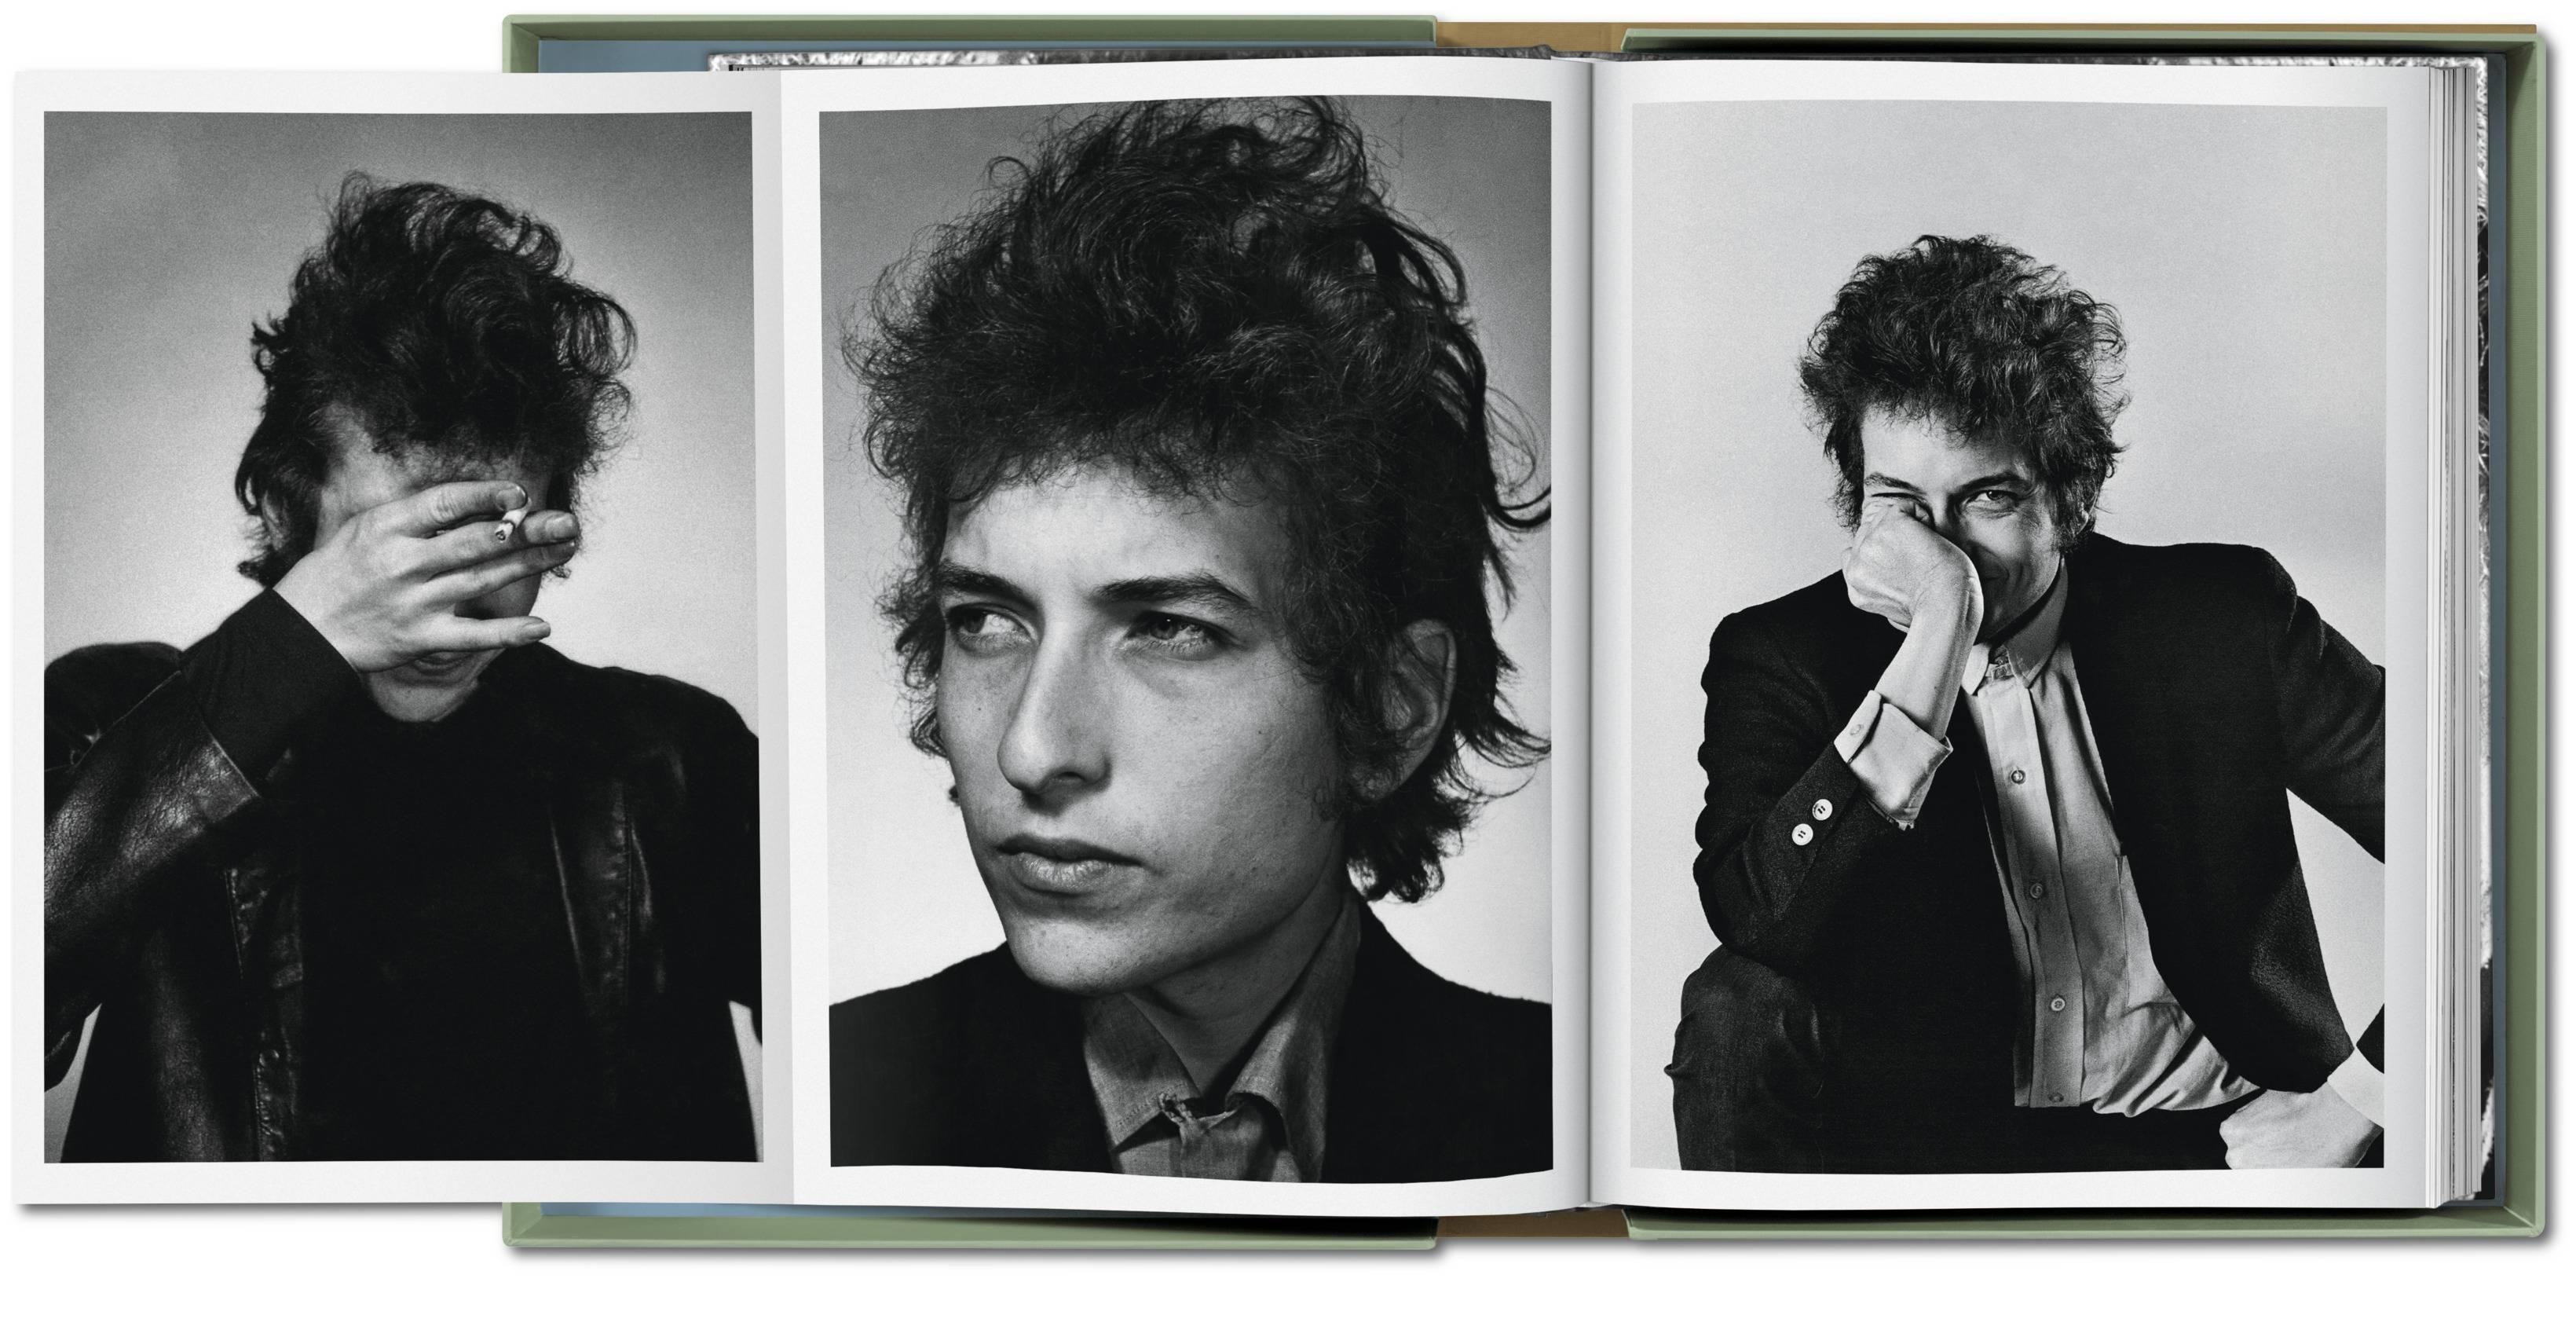 Daniel Kramer, Bob Dylan, Art Edition No. 1-100 ‘Bob Dylan with Dark Glasses, NY 5